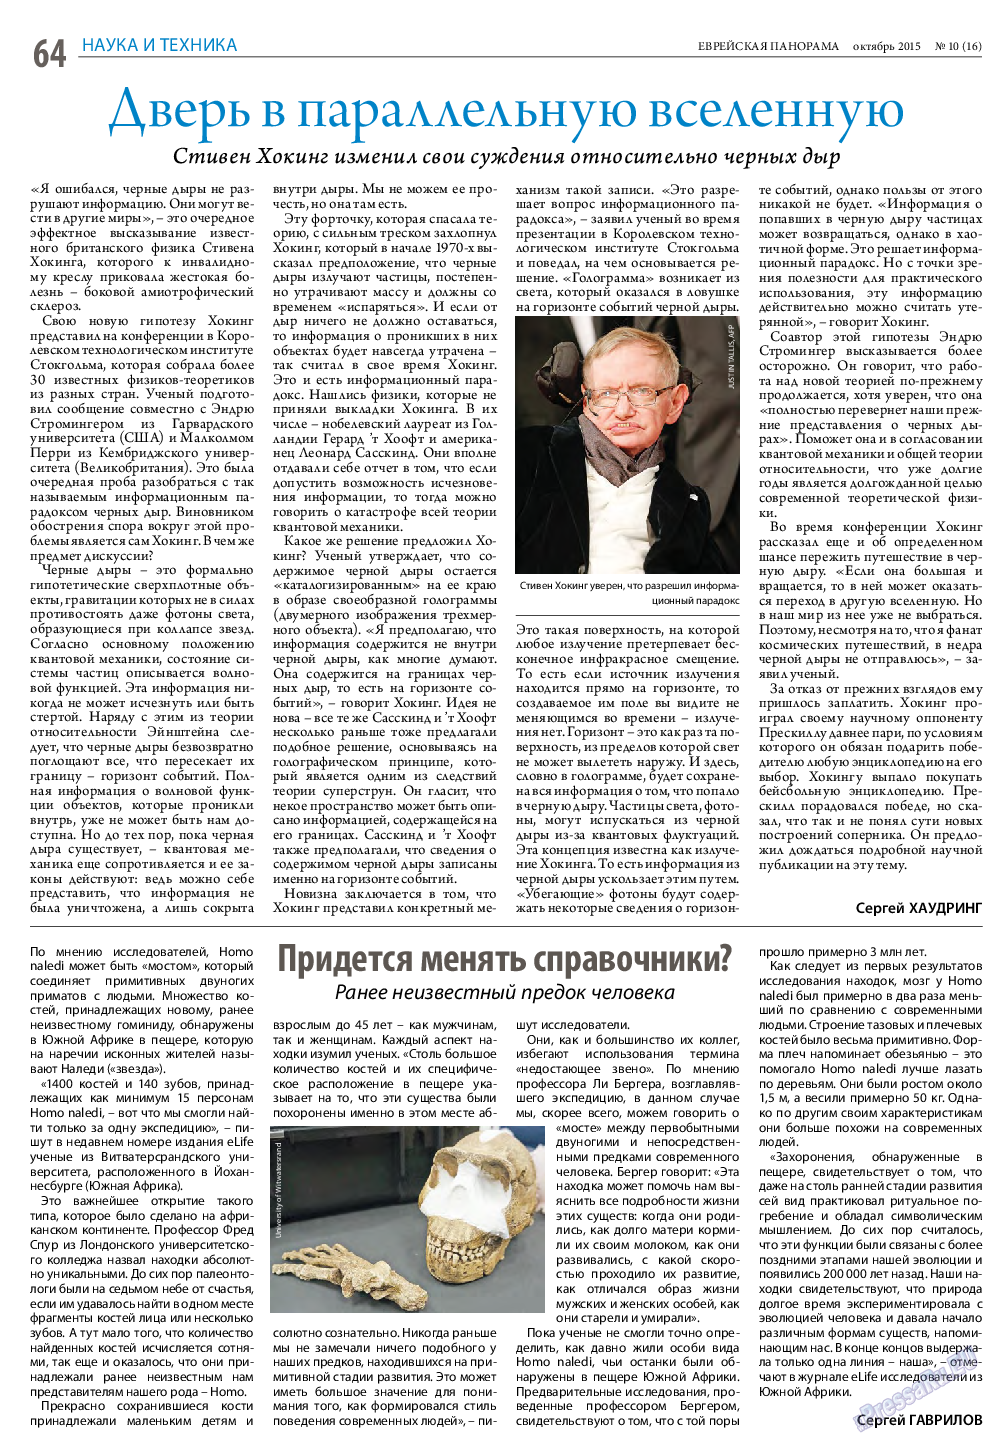 Еврейская панорама, газета. 2015 №10 стр.64